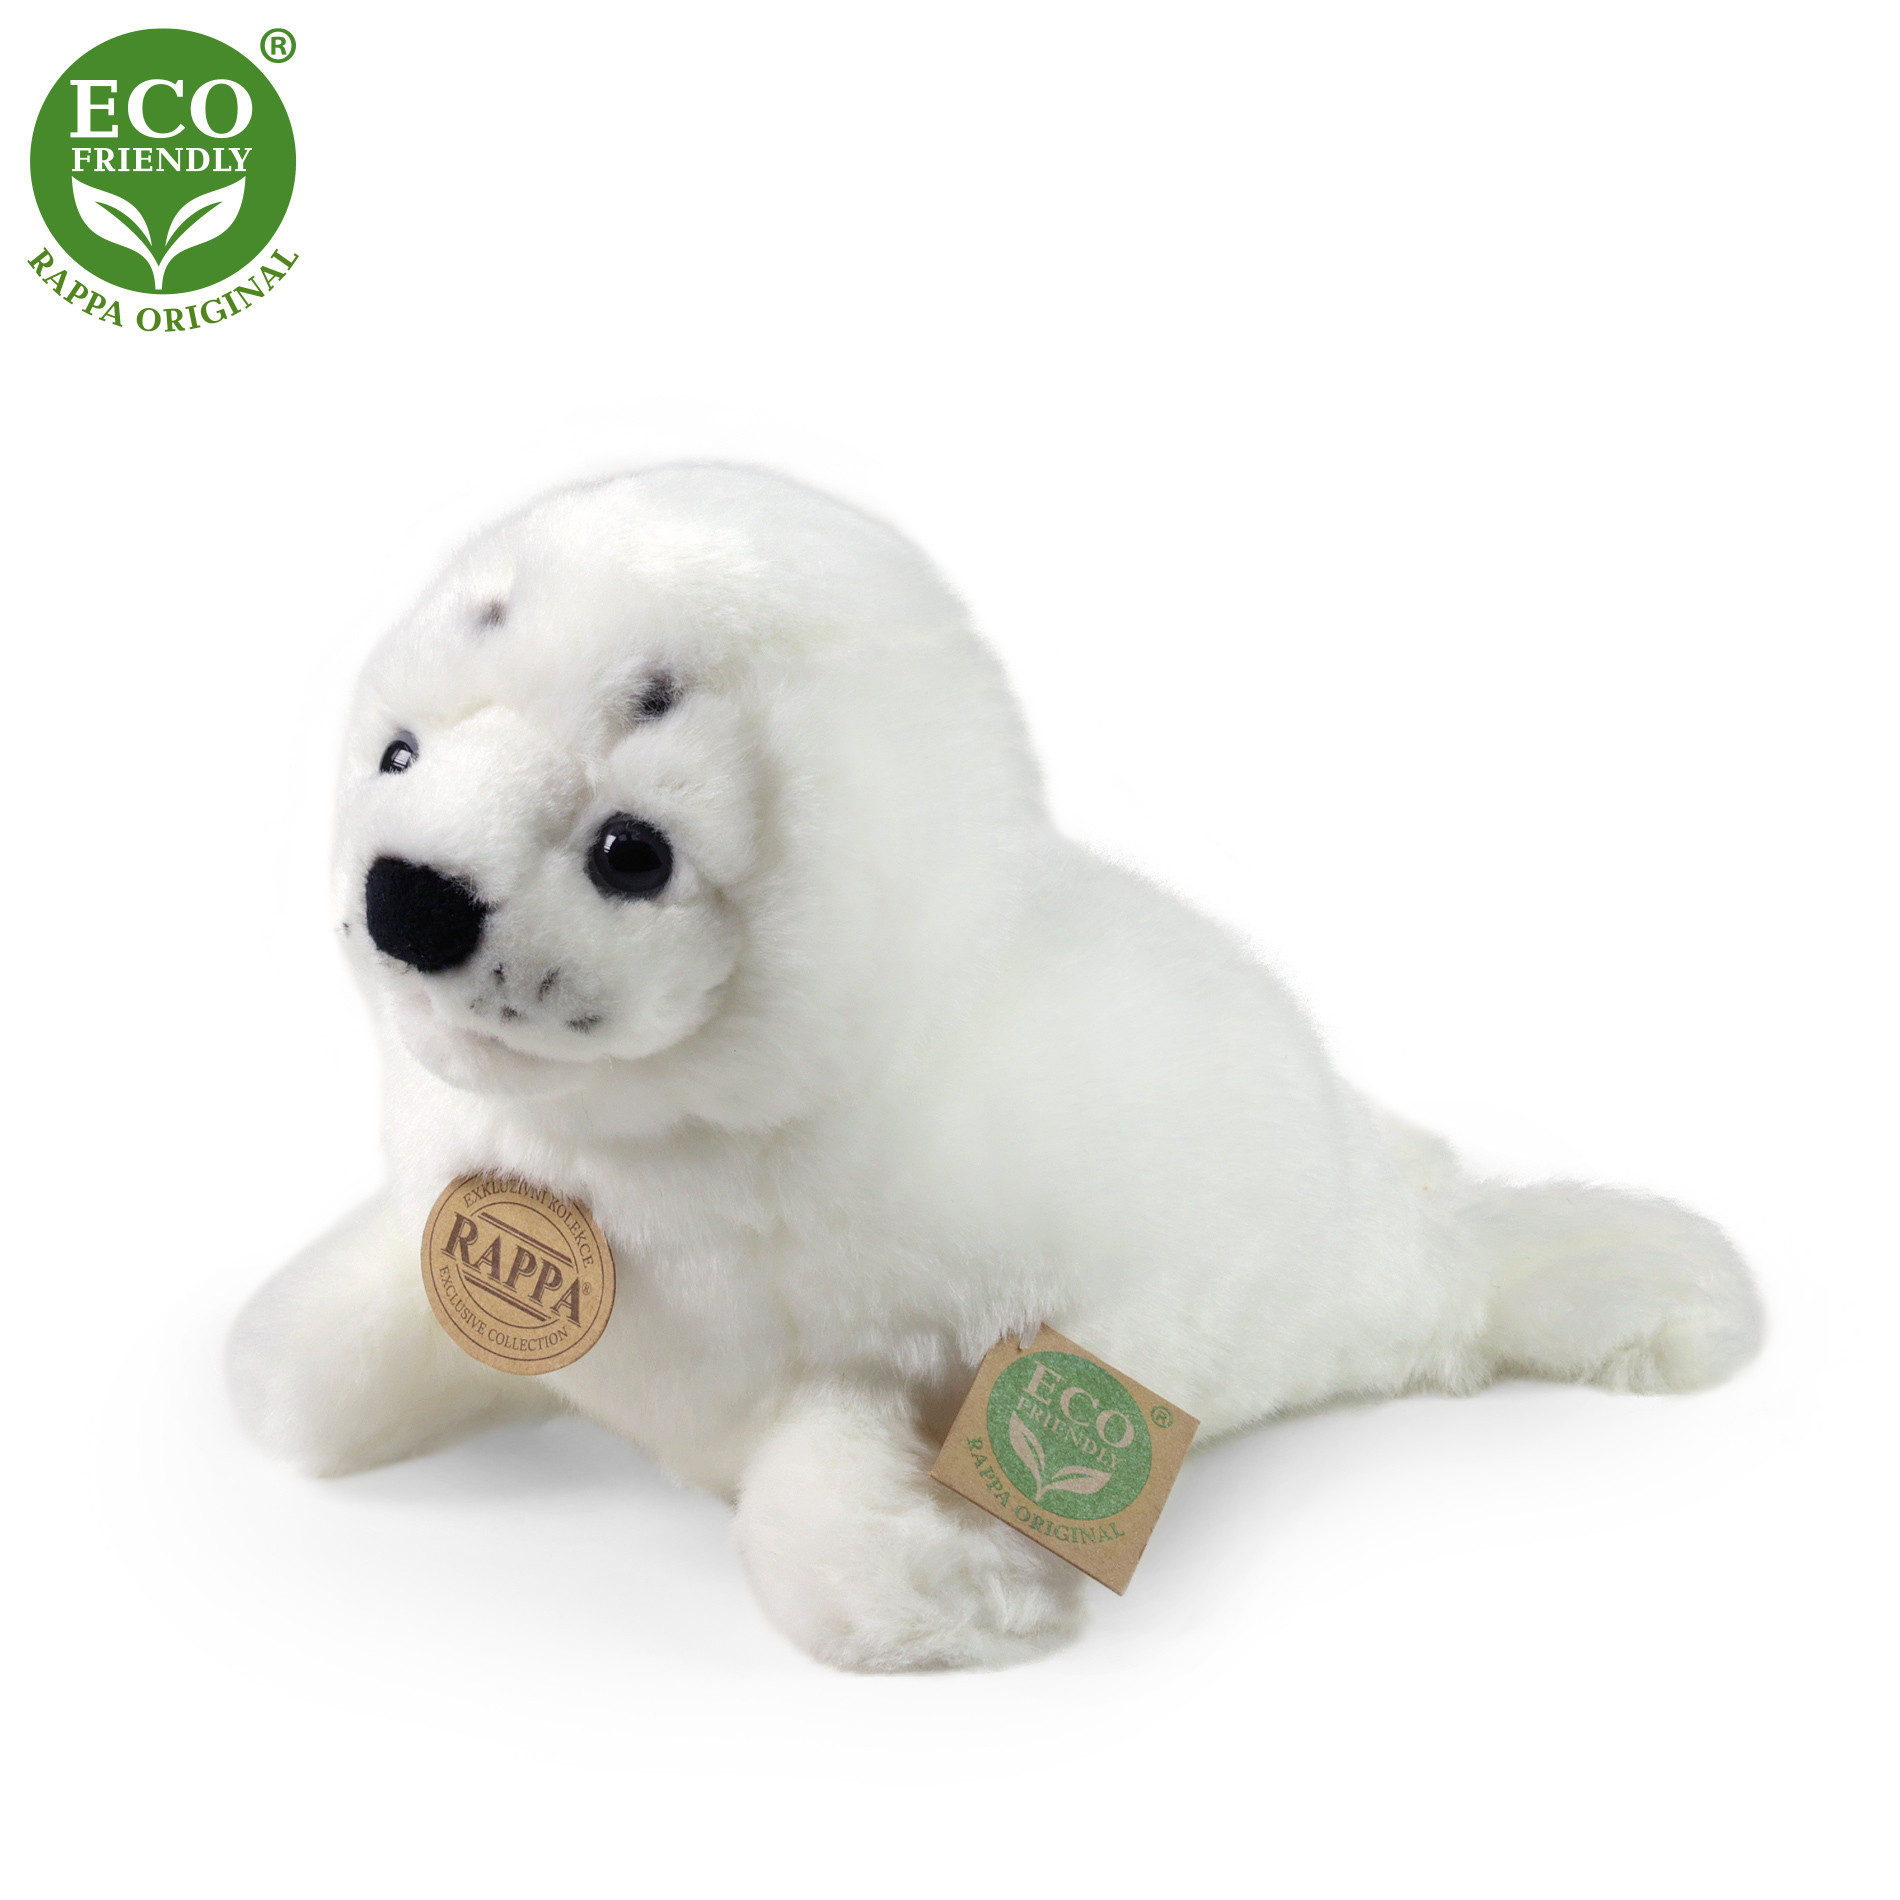 Plush seal 25 cm ECO-FRIENDLY